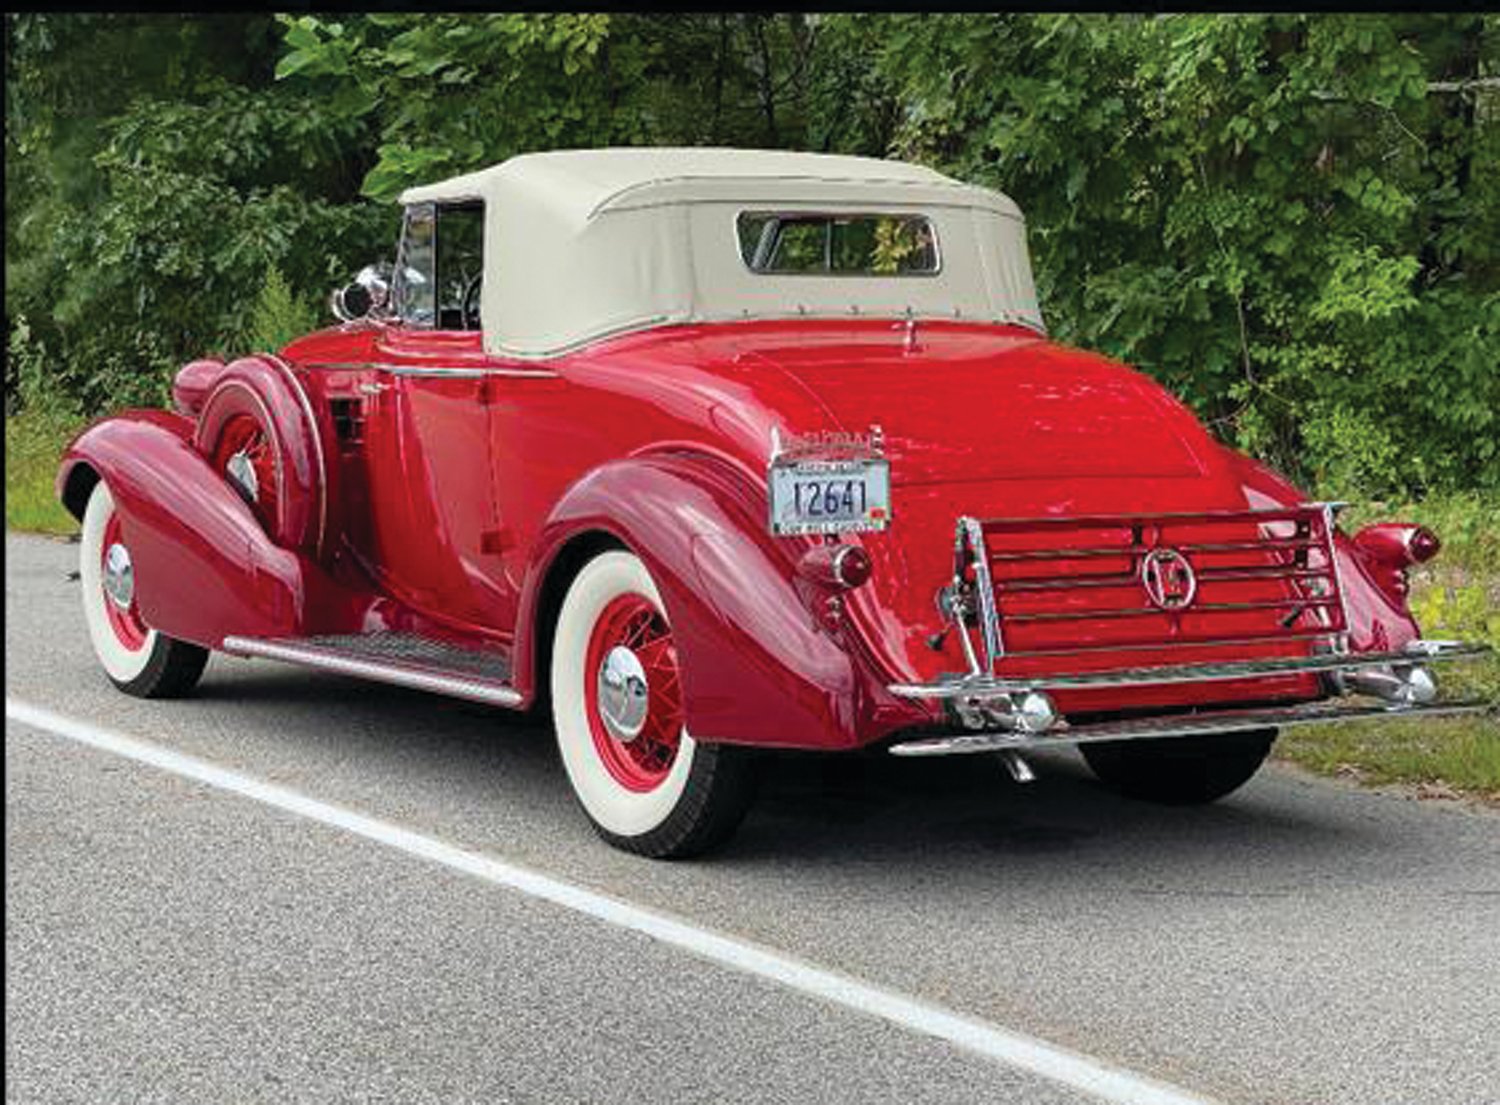 ROAD READY: John Ricci’s 1934 Cadillac finally cruises down the road after a long restoration.